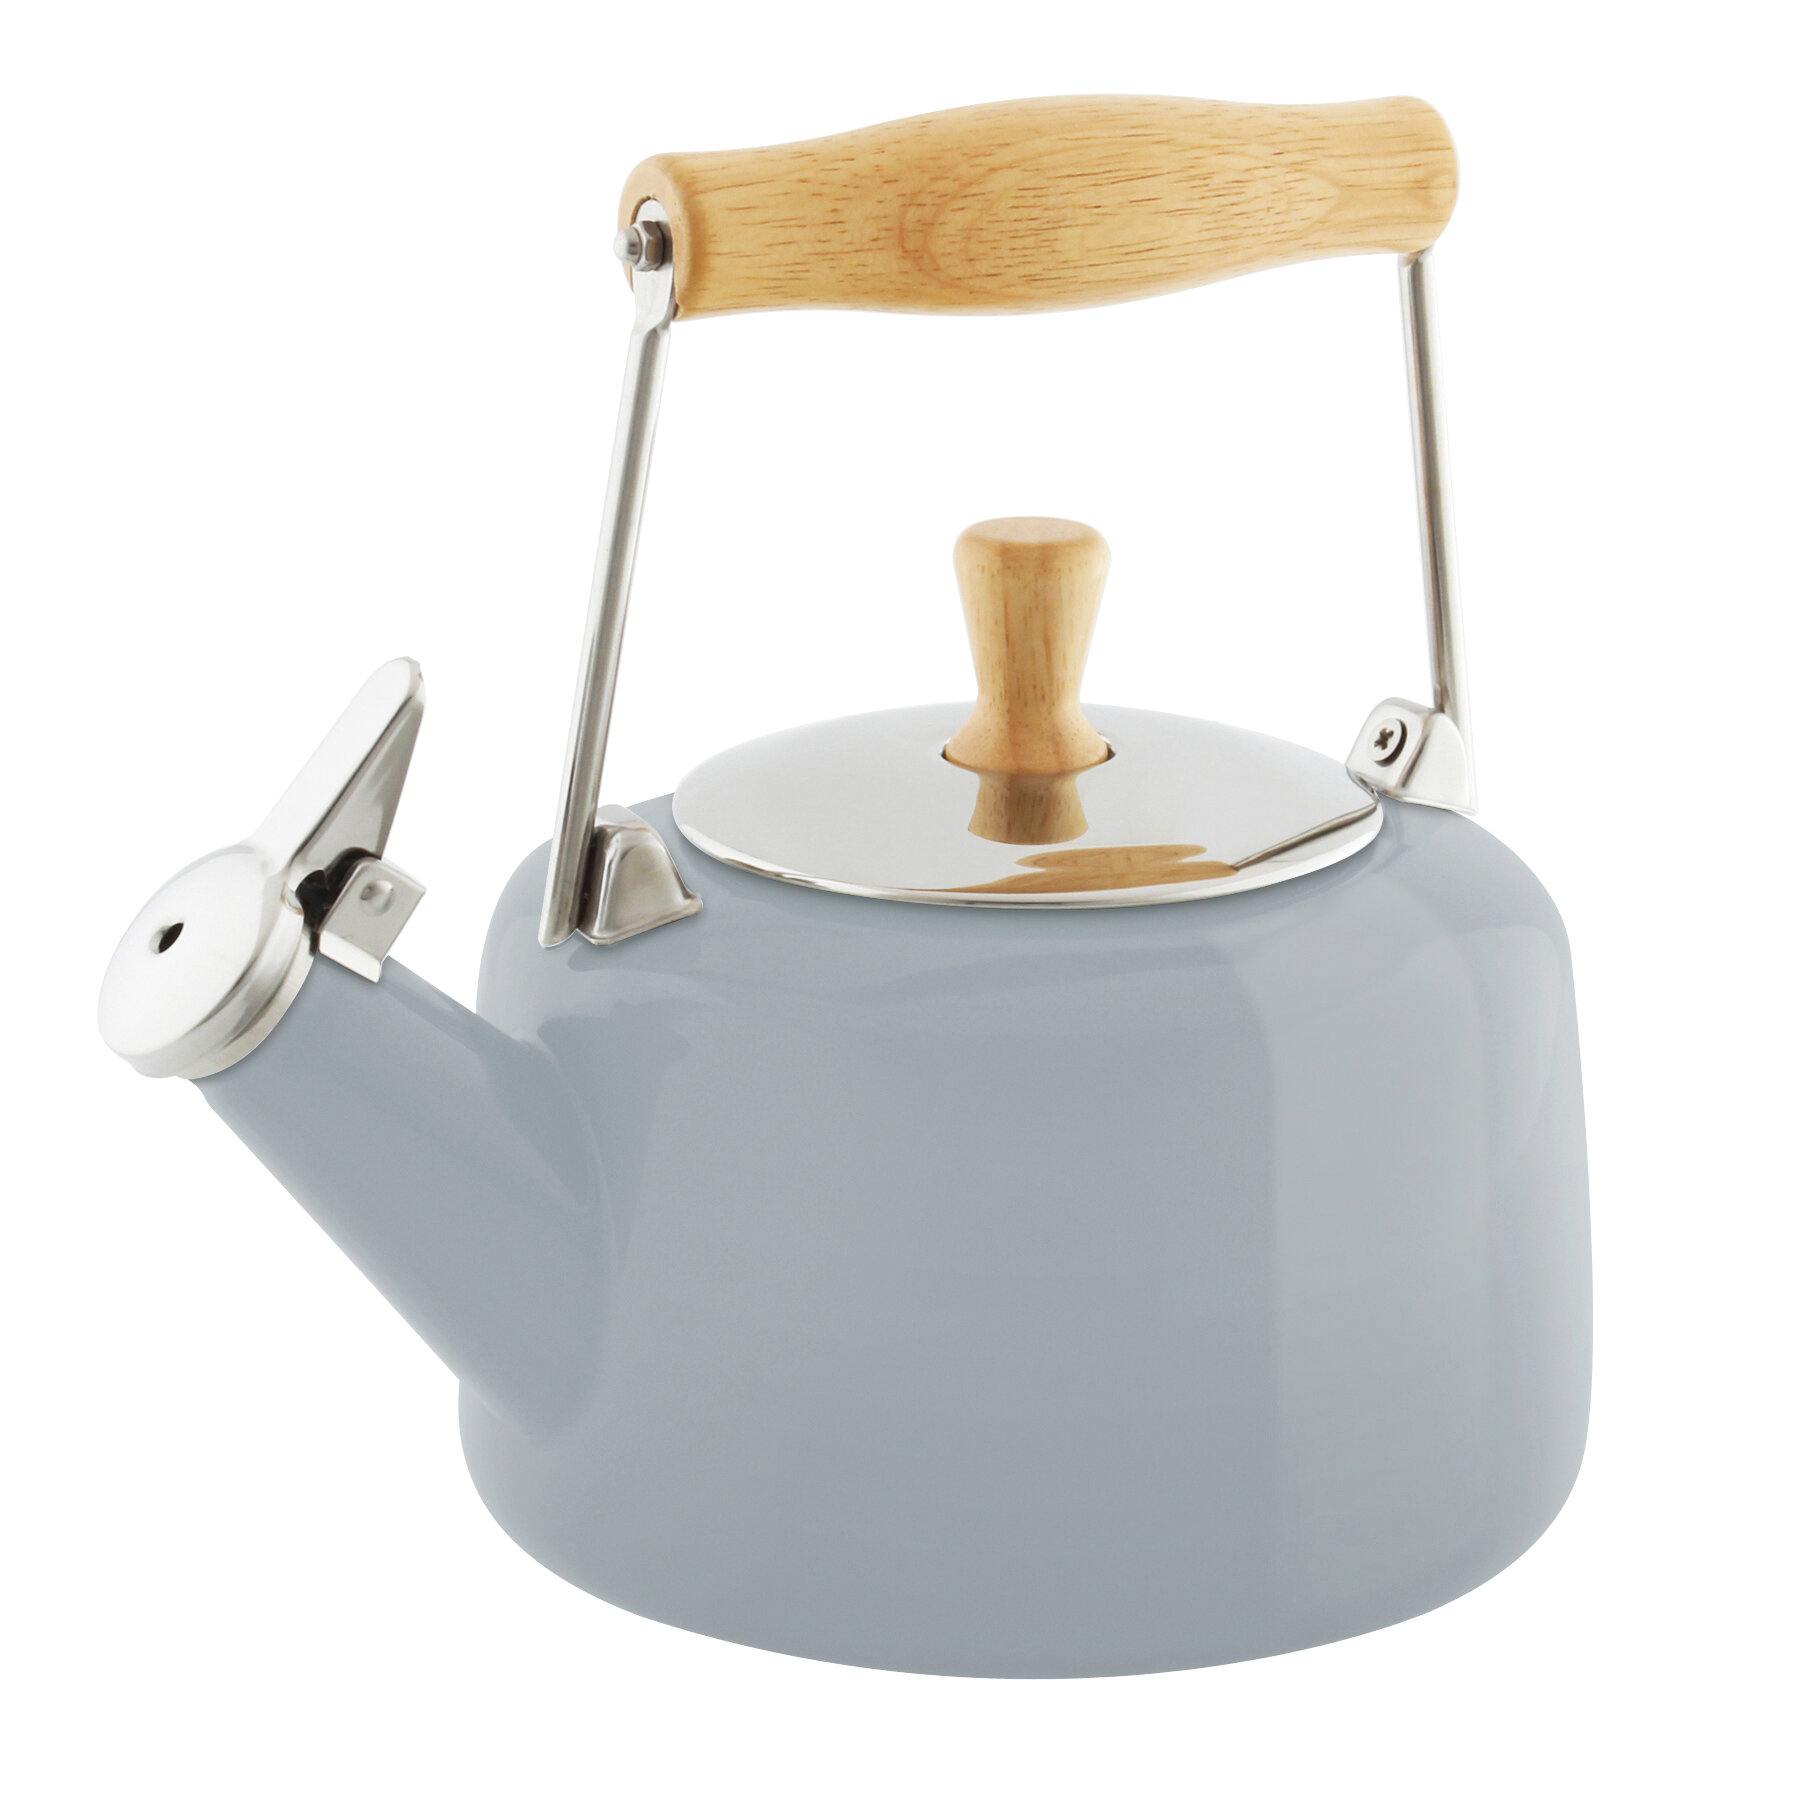 Vintage Farberware Tea Kettle Tea Pot With Wood Handles. Retro 